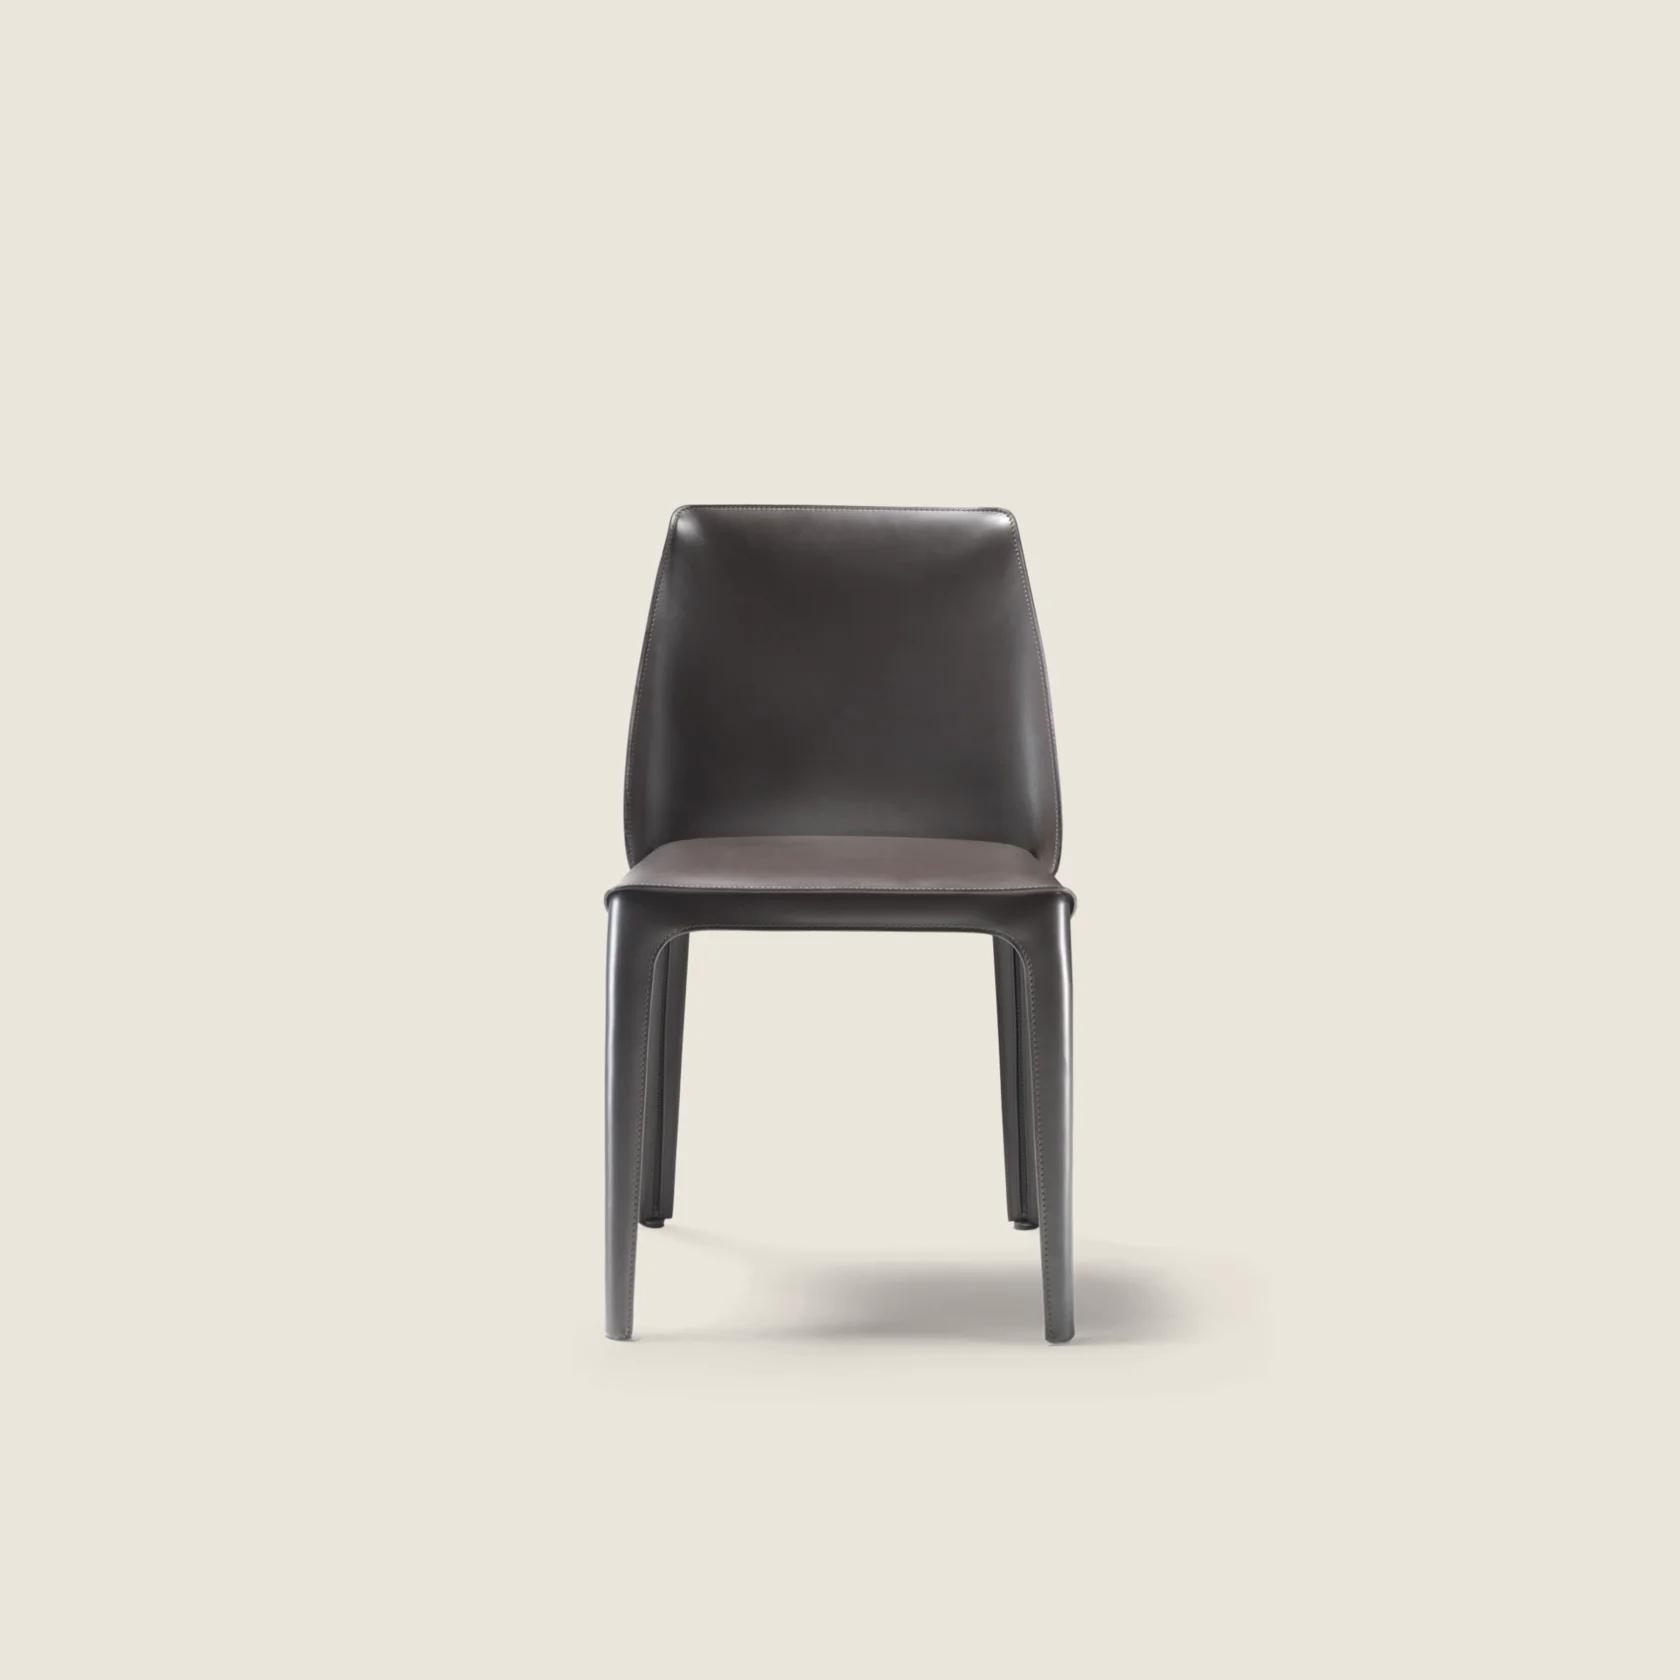 ISABEL 小扶手椅/椅子| Design Made in Italy - Flexform